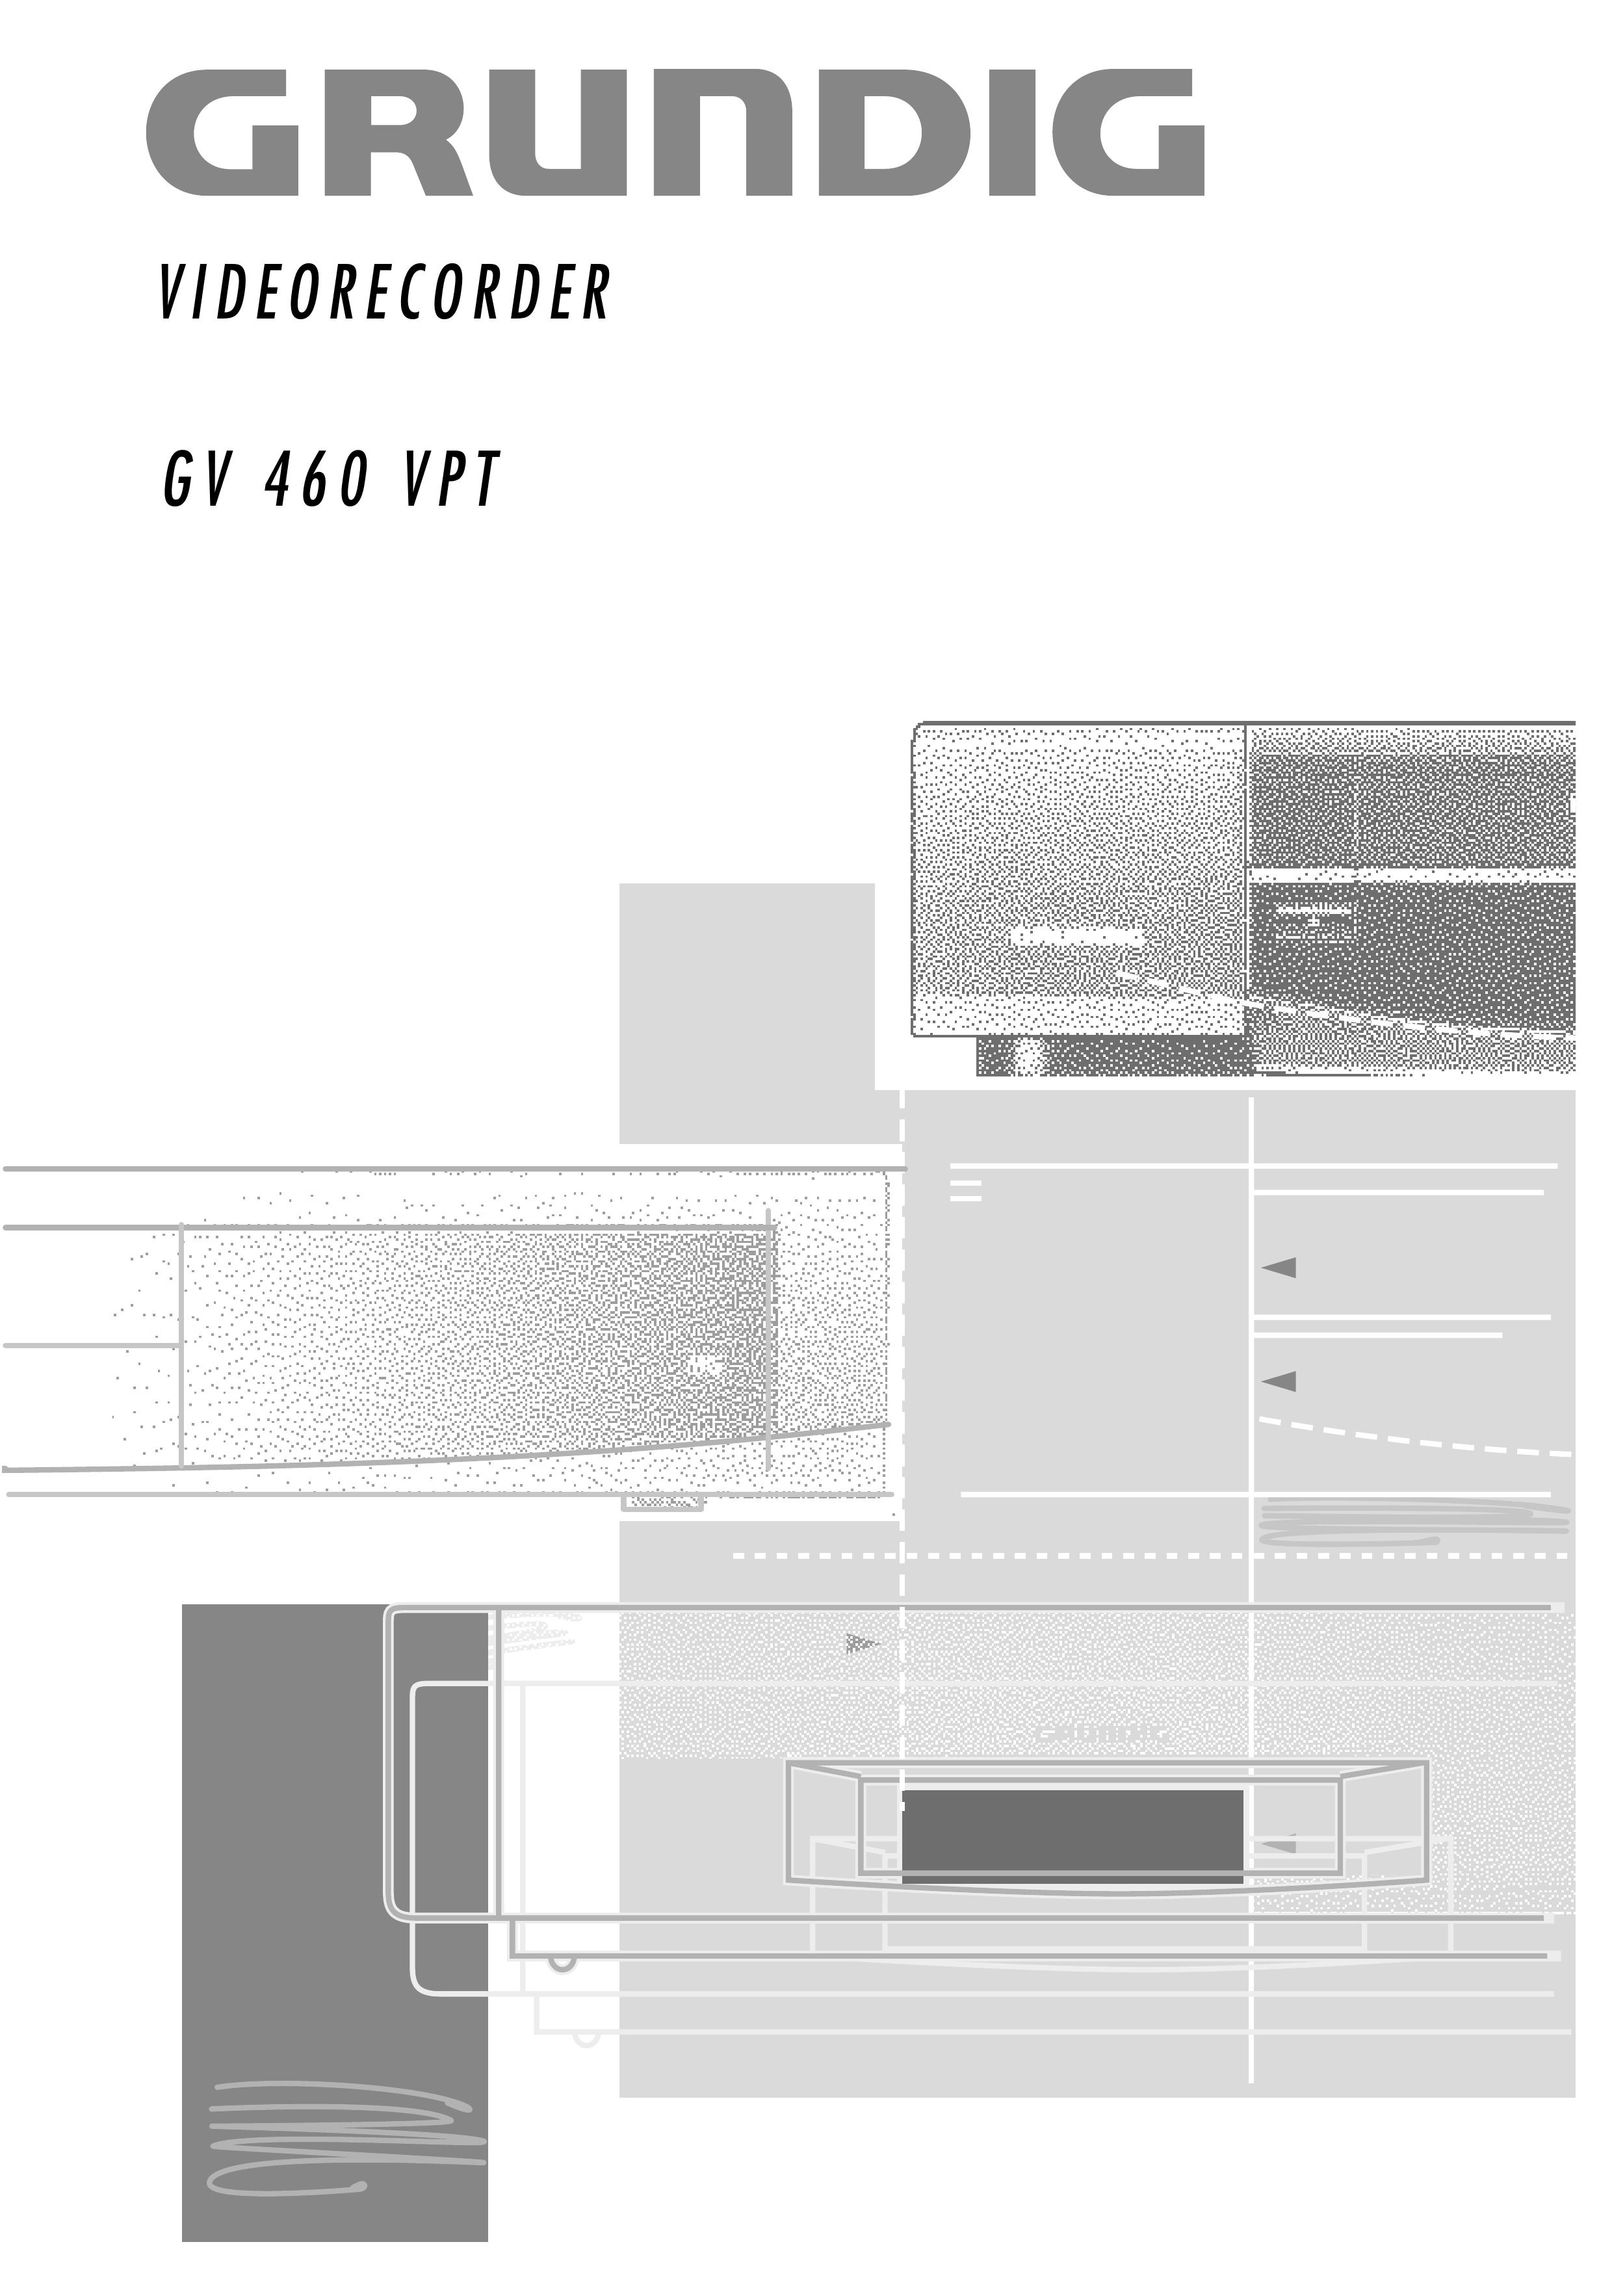 Grundig GV 460 VPT VCR User Manual